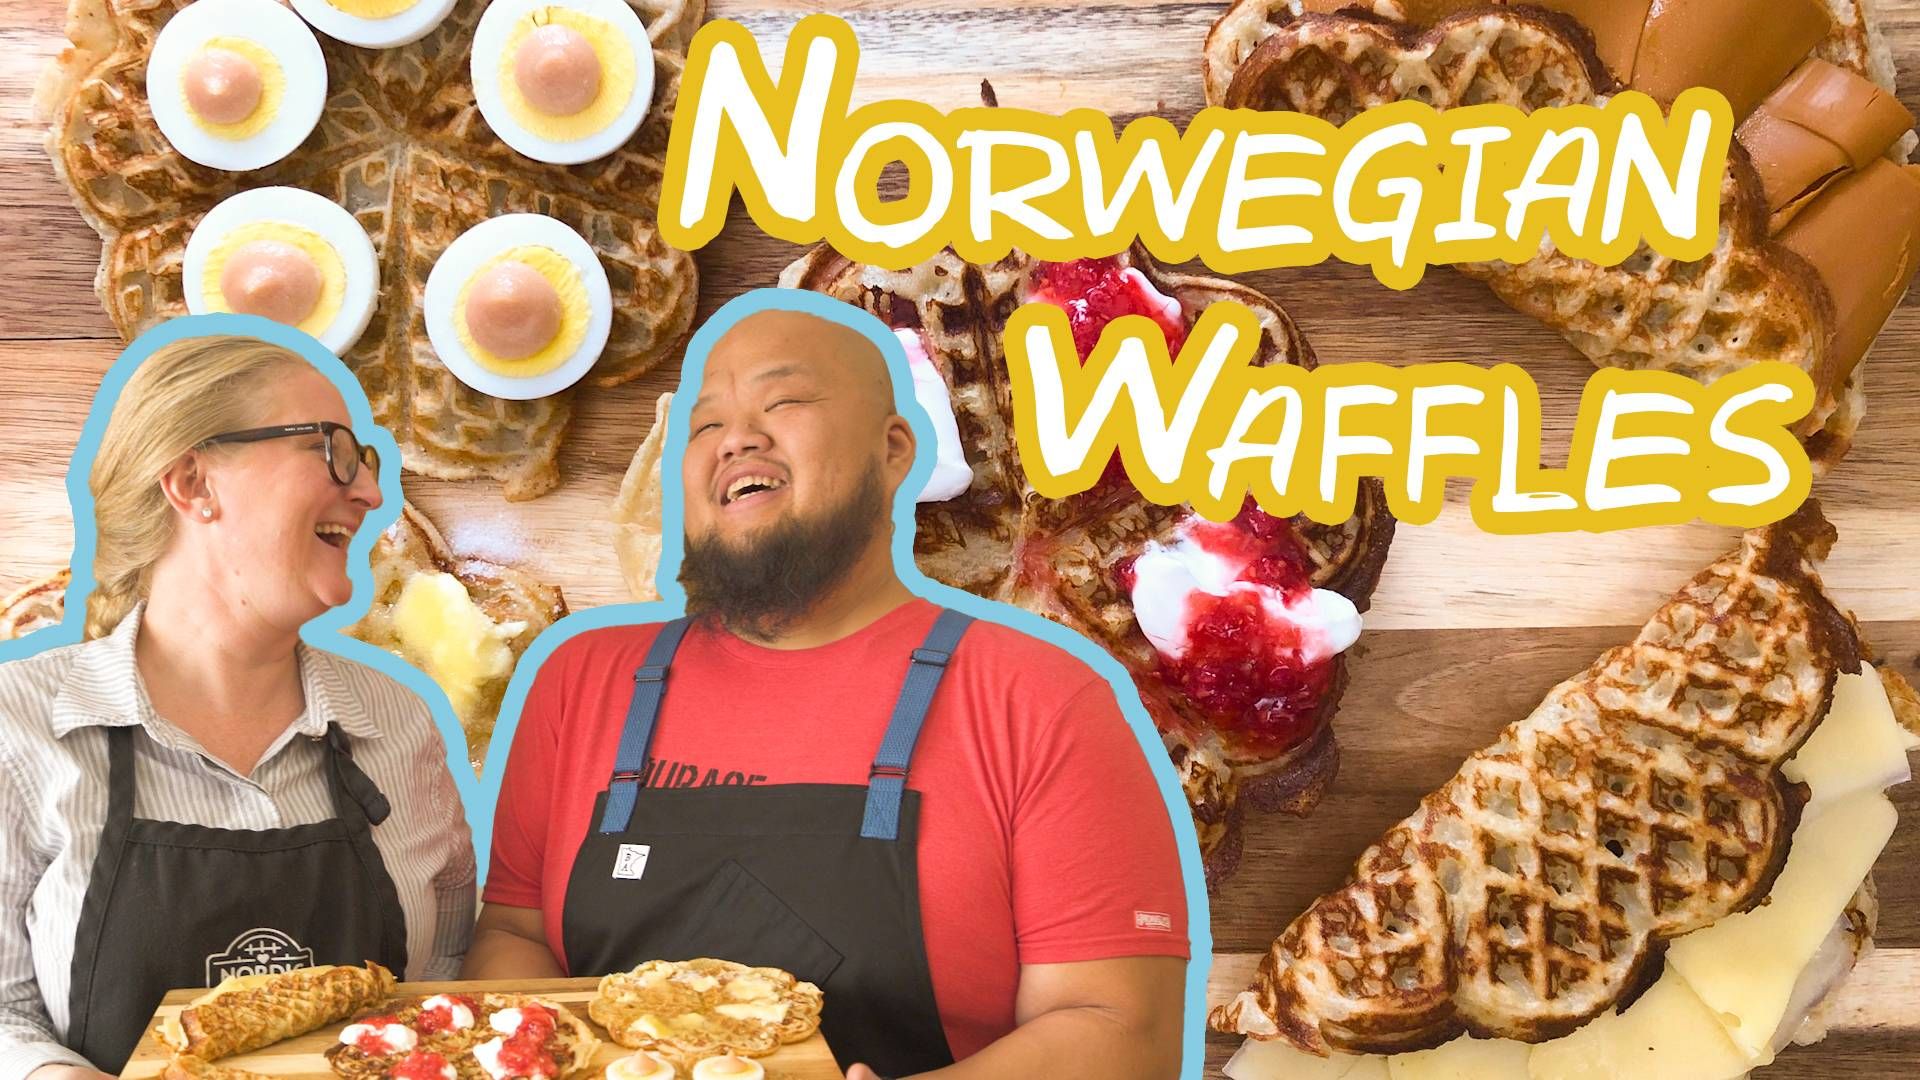 Relish: Stine Aasland's 'Koselig'-Inspired Norwegian Waffles